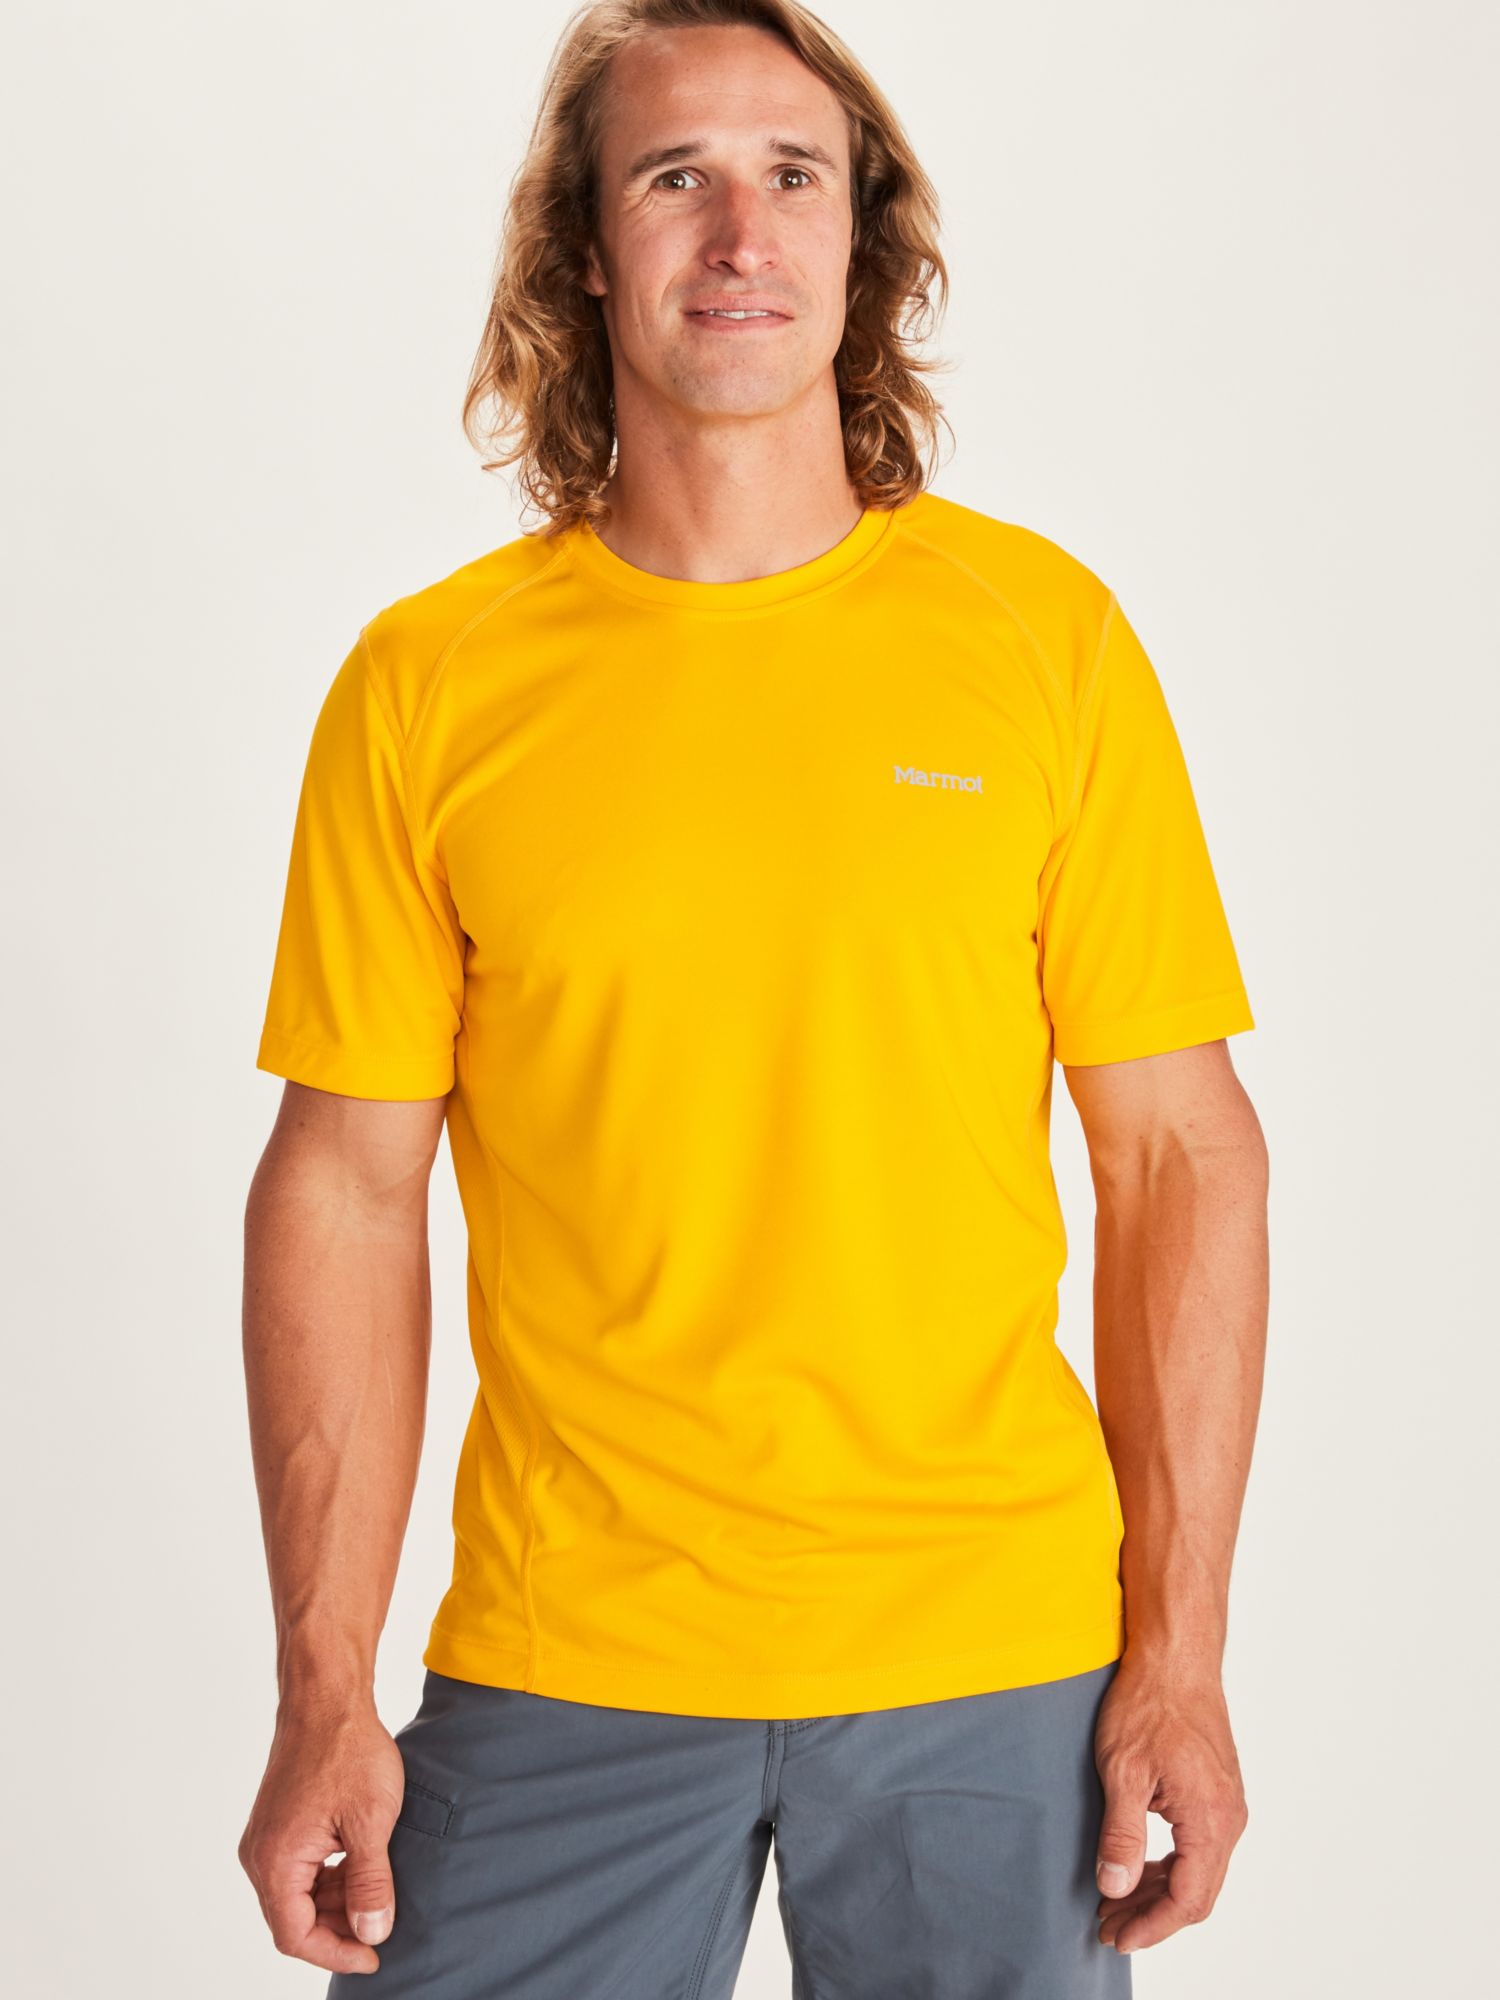 Men's Windridge Short-Sleeve Shirt